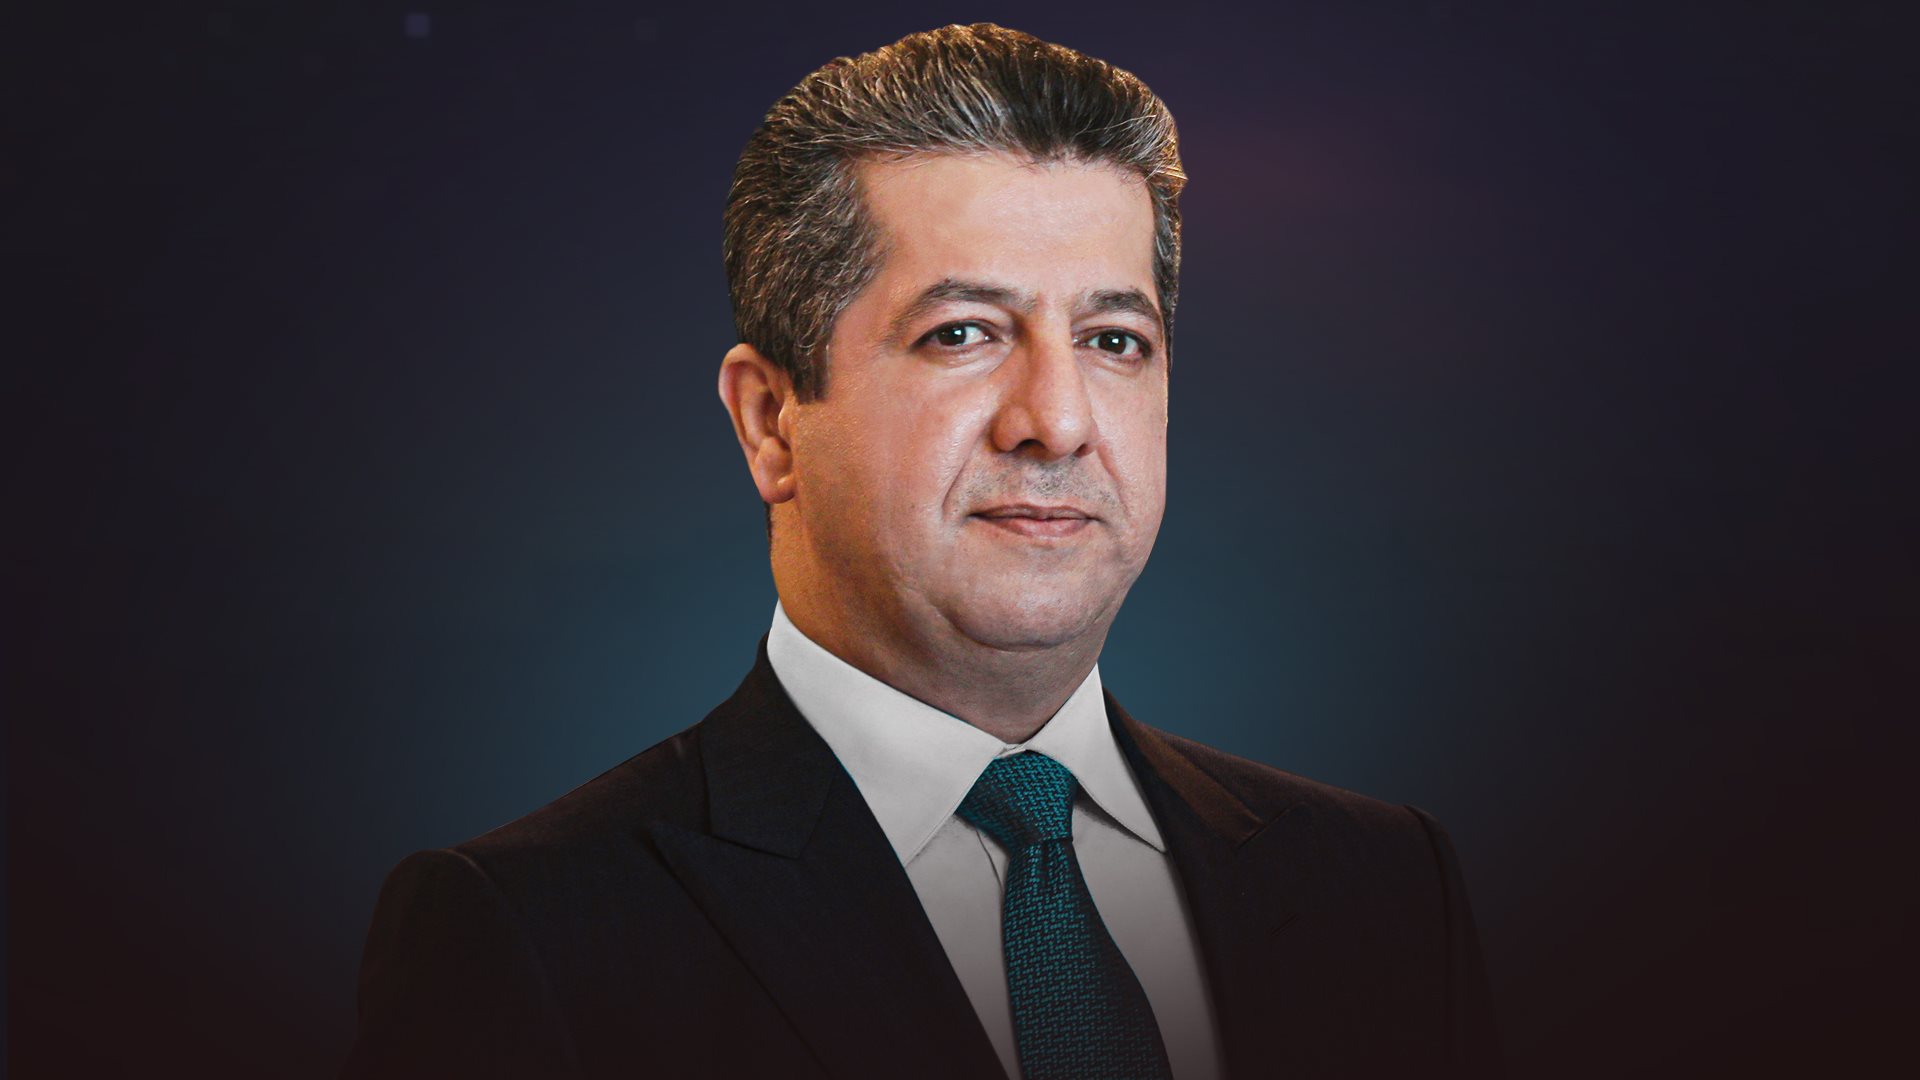 Masrour Barzani, Prime Minister of the Kurdistan Regional Government